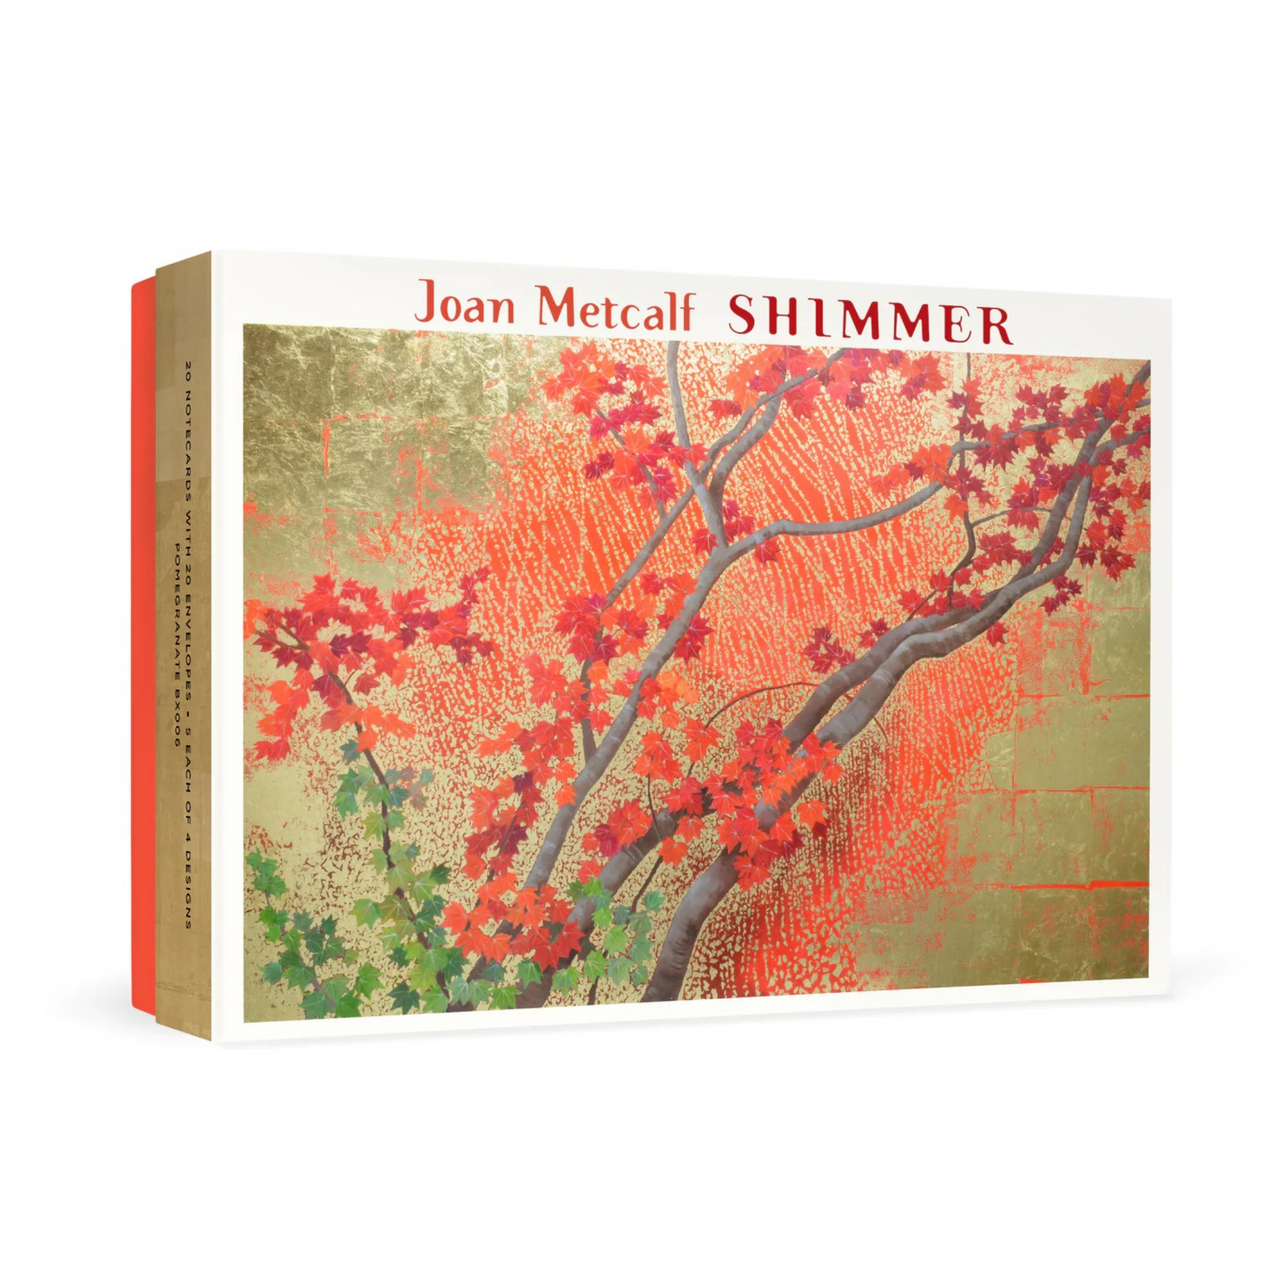 Pomegranate: Joan Metcalf "Shimmer" notecards